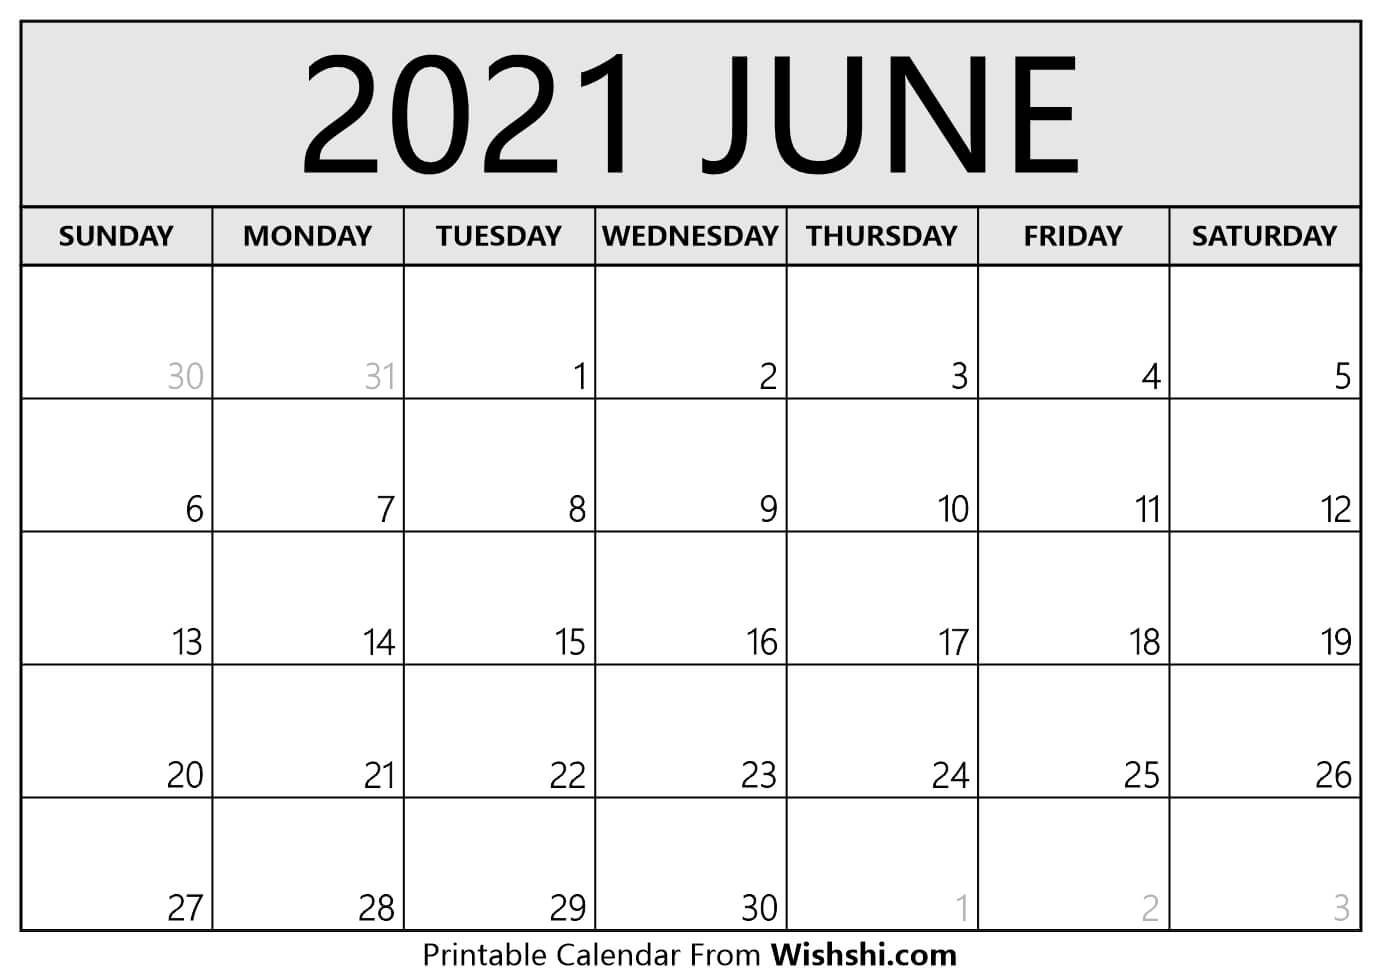 June 2021 Calendar Printable - Free Printable Calendars June 2021 Calendar Printable June Calendar Of 2021